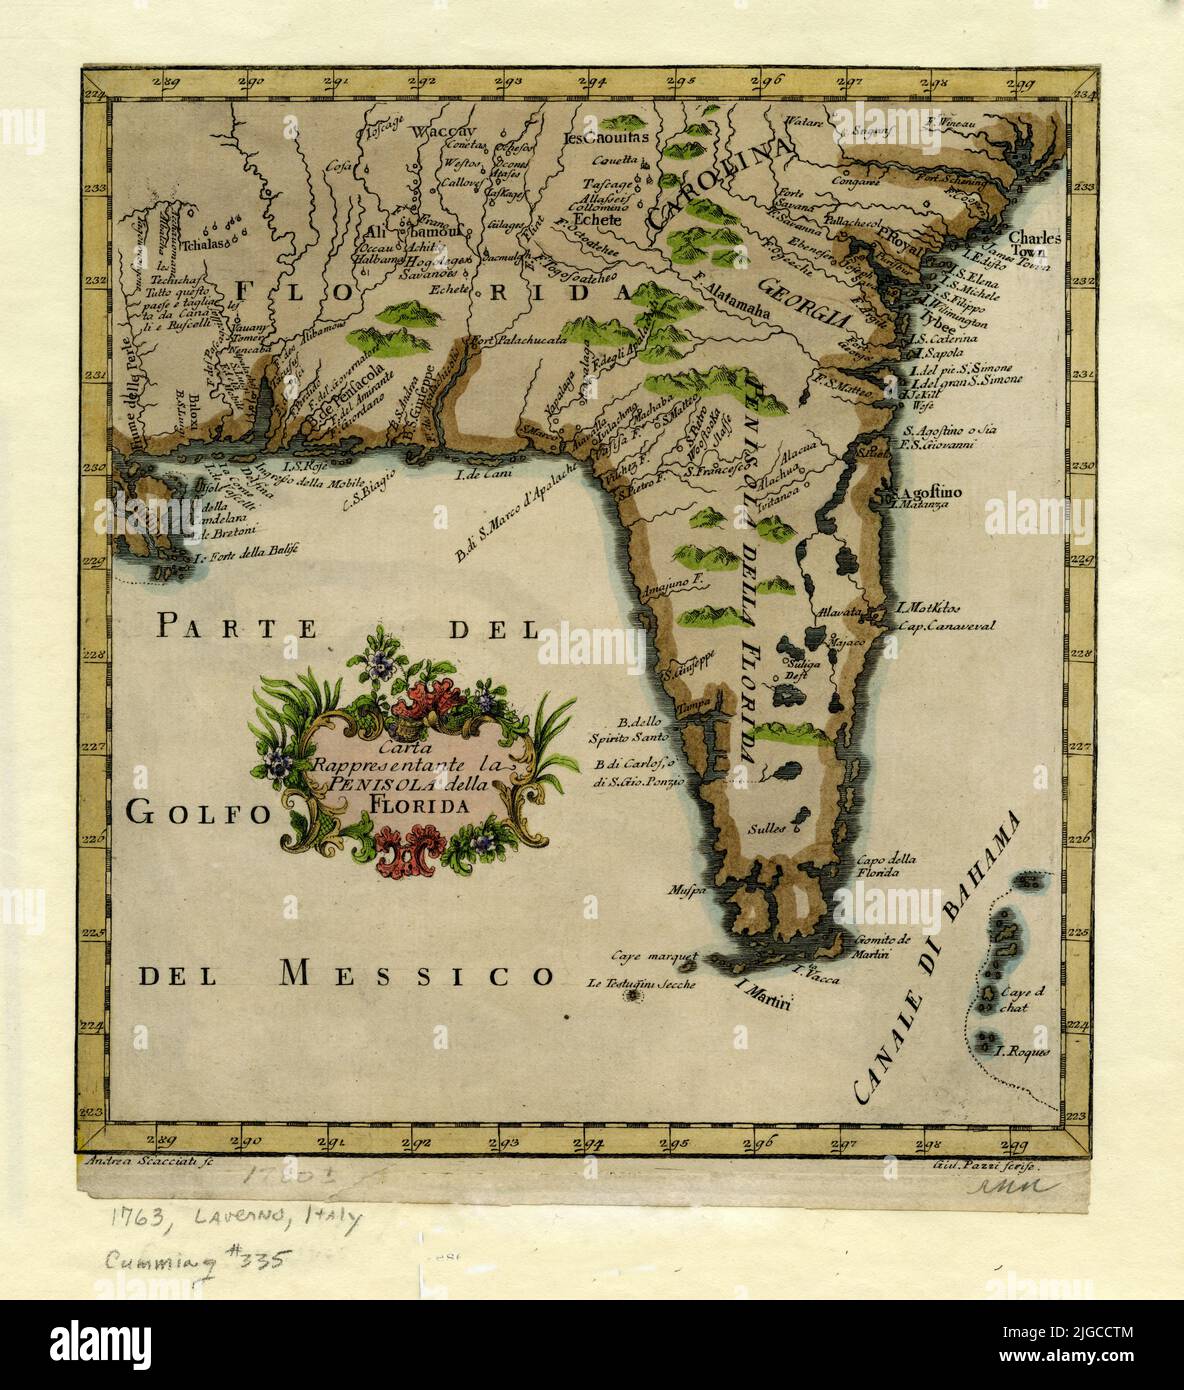 Map of the Peninsula of Florida, 1763, by Andrea Scacciati. Italian language Stock Photo